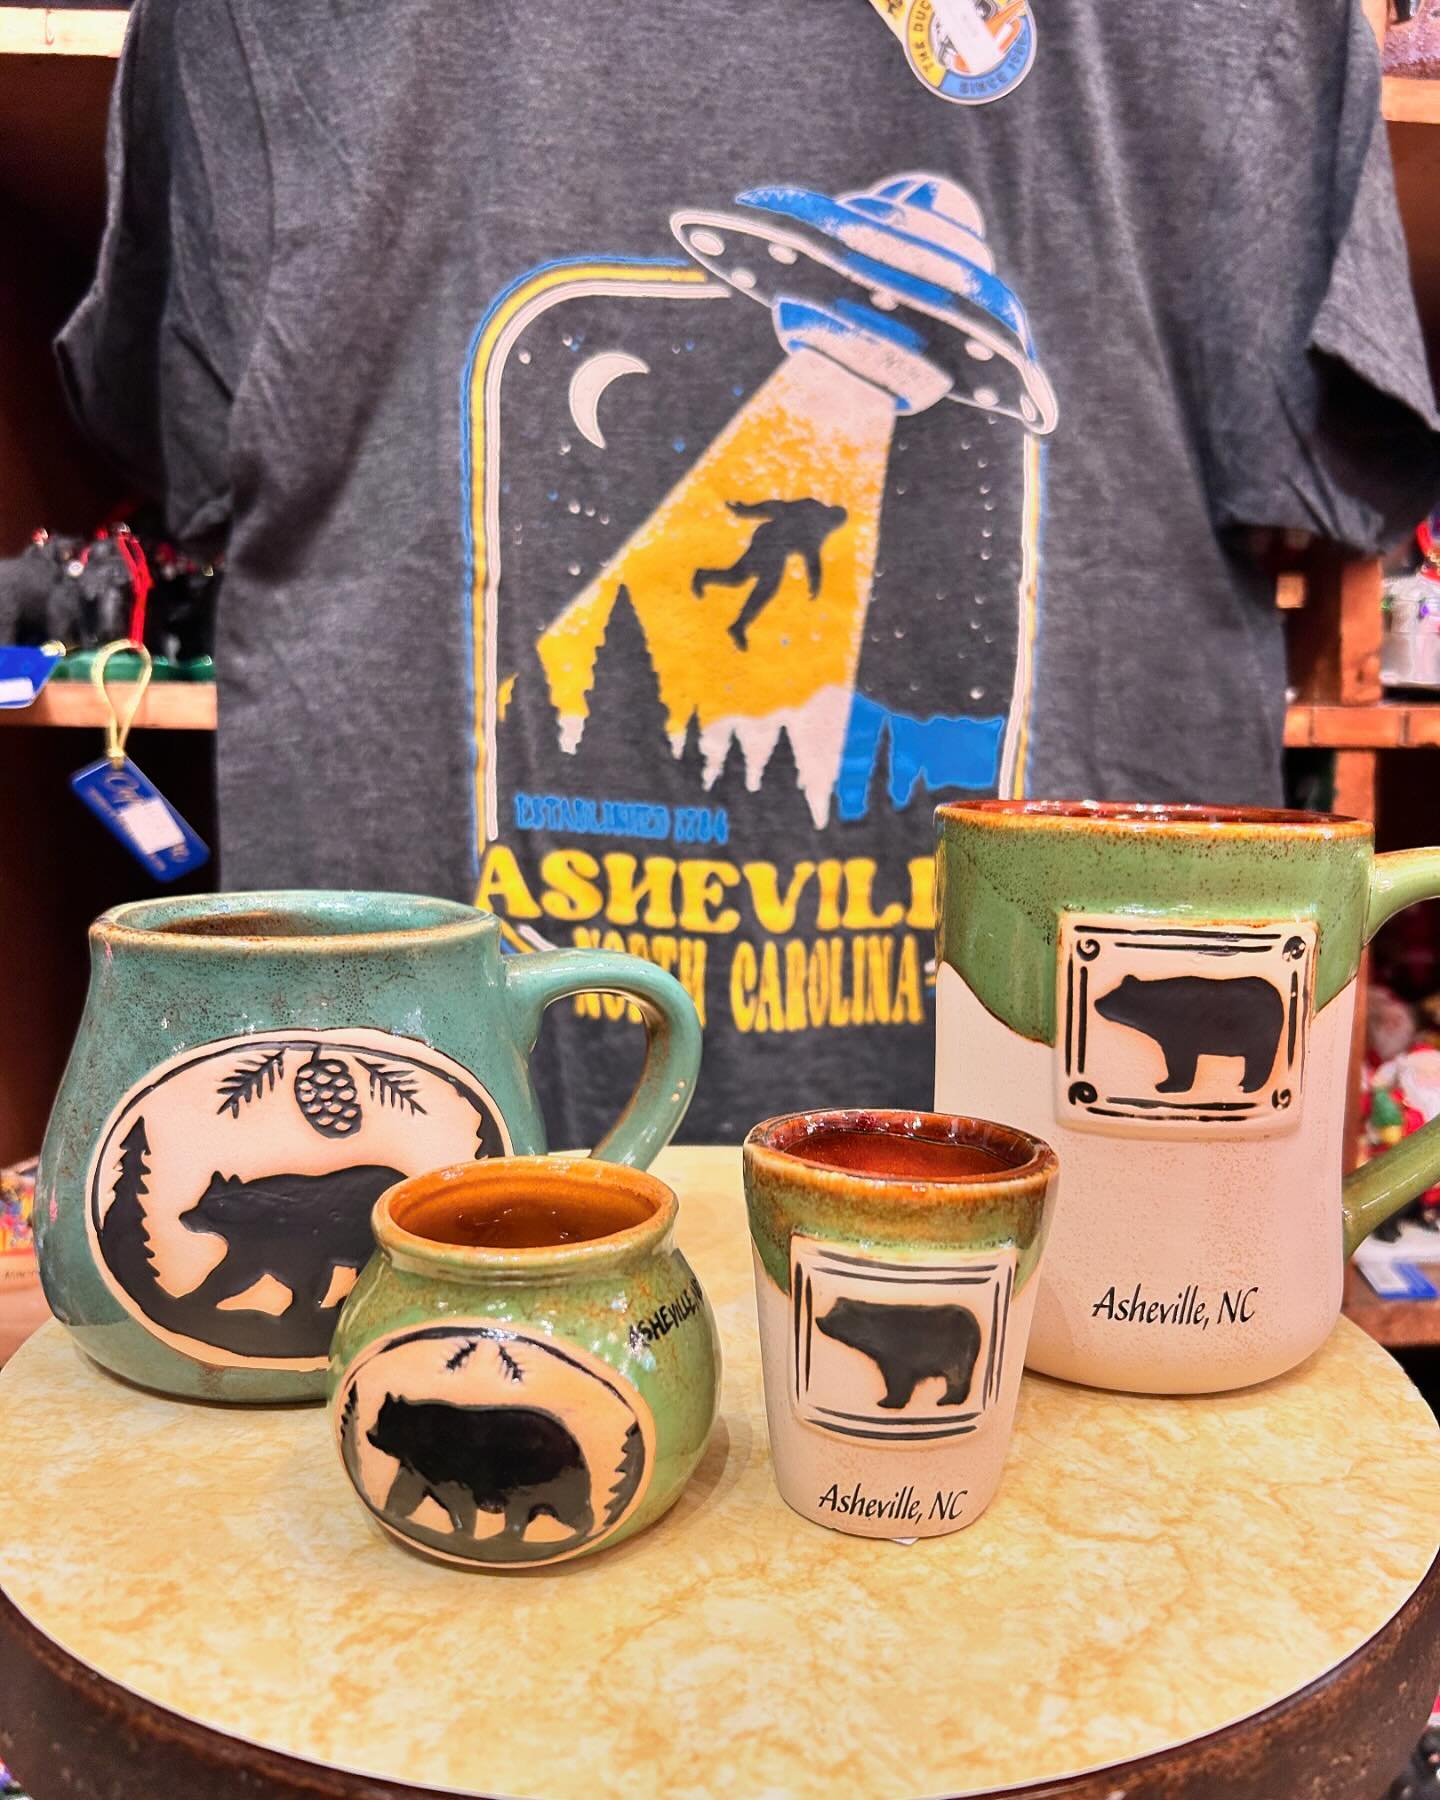 Come get your Asheville merch right here !! #ashevillenc #nc #northcarolina #asheville #shopsmall